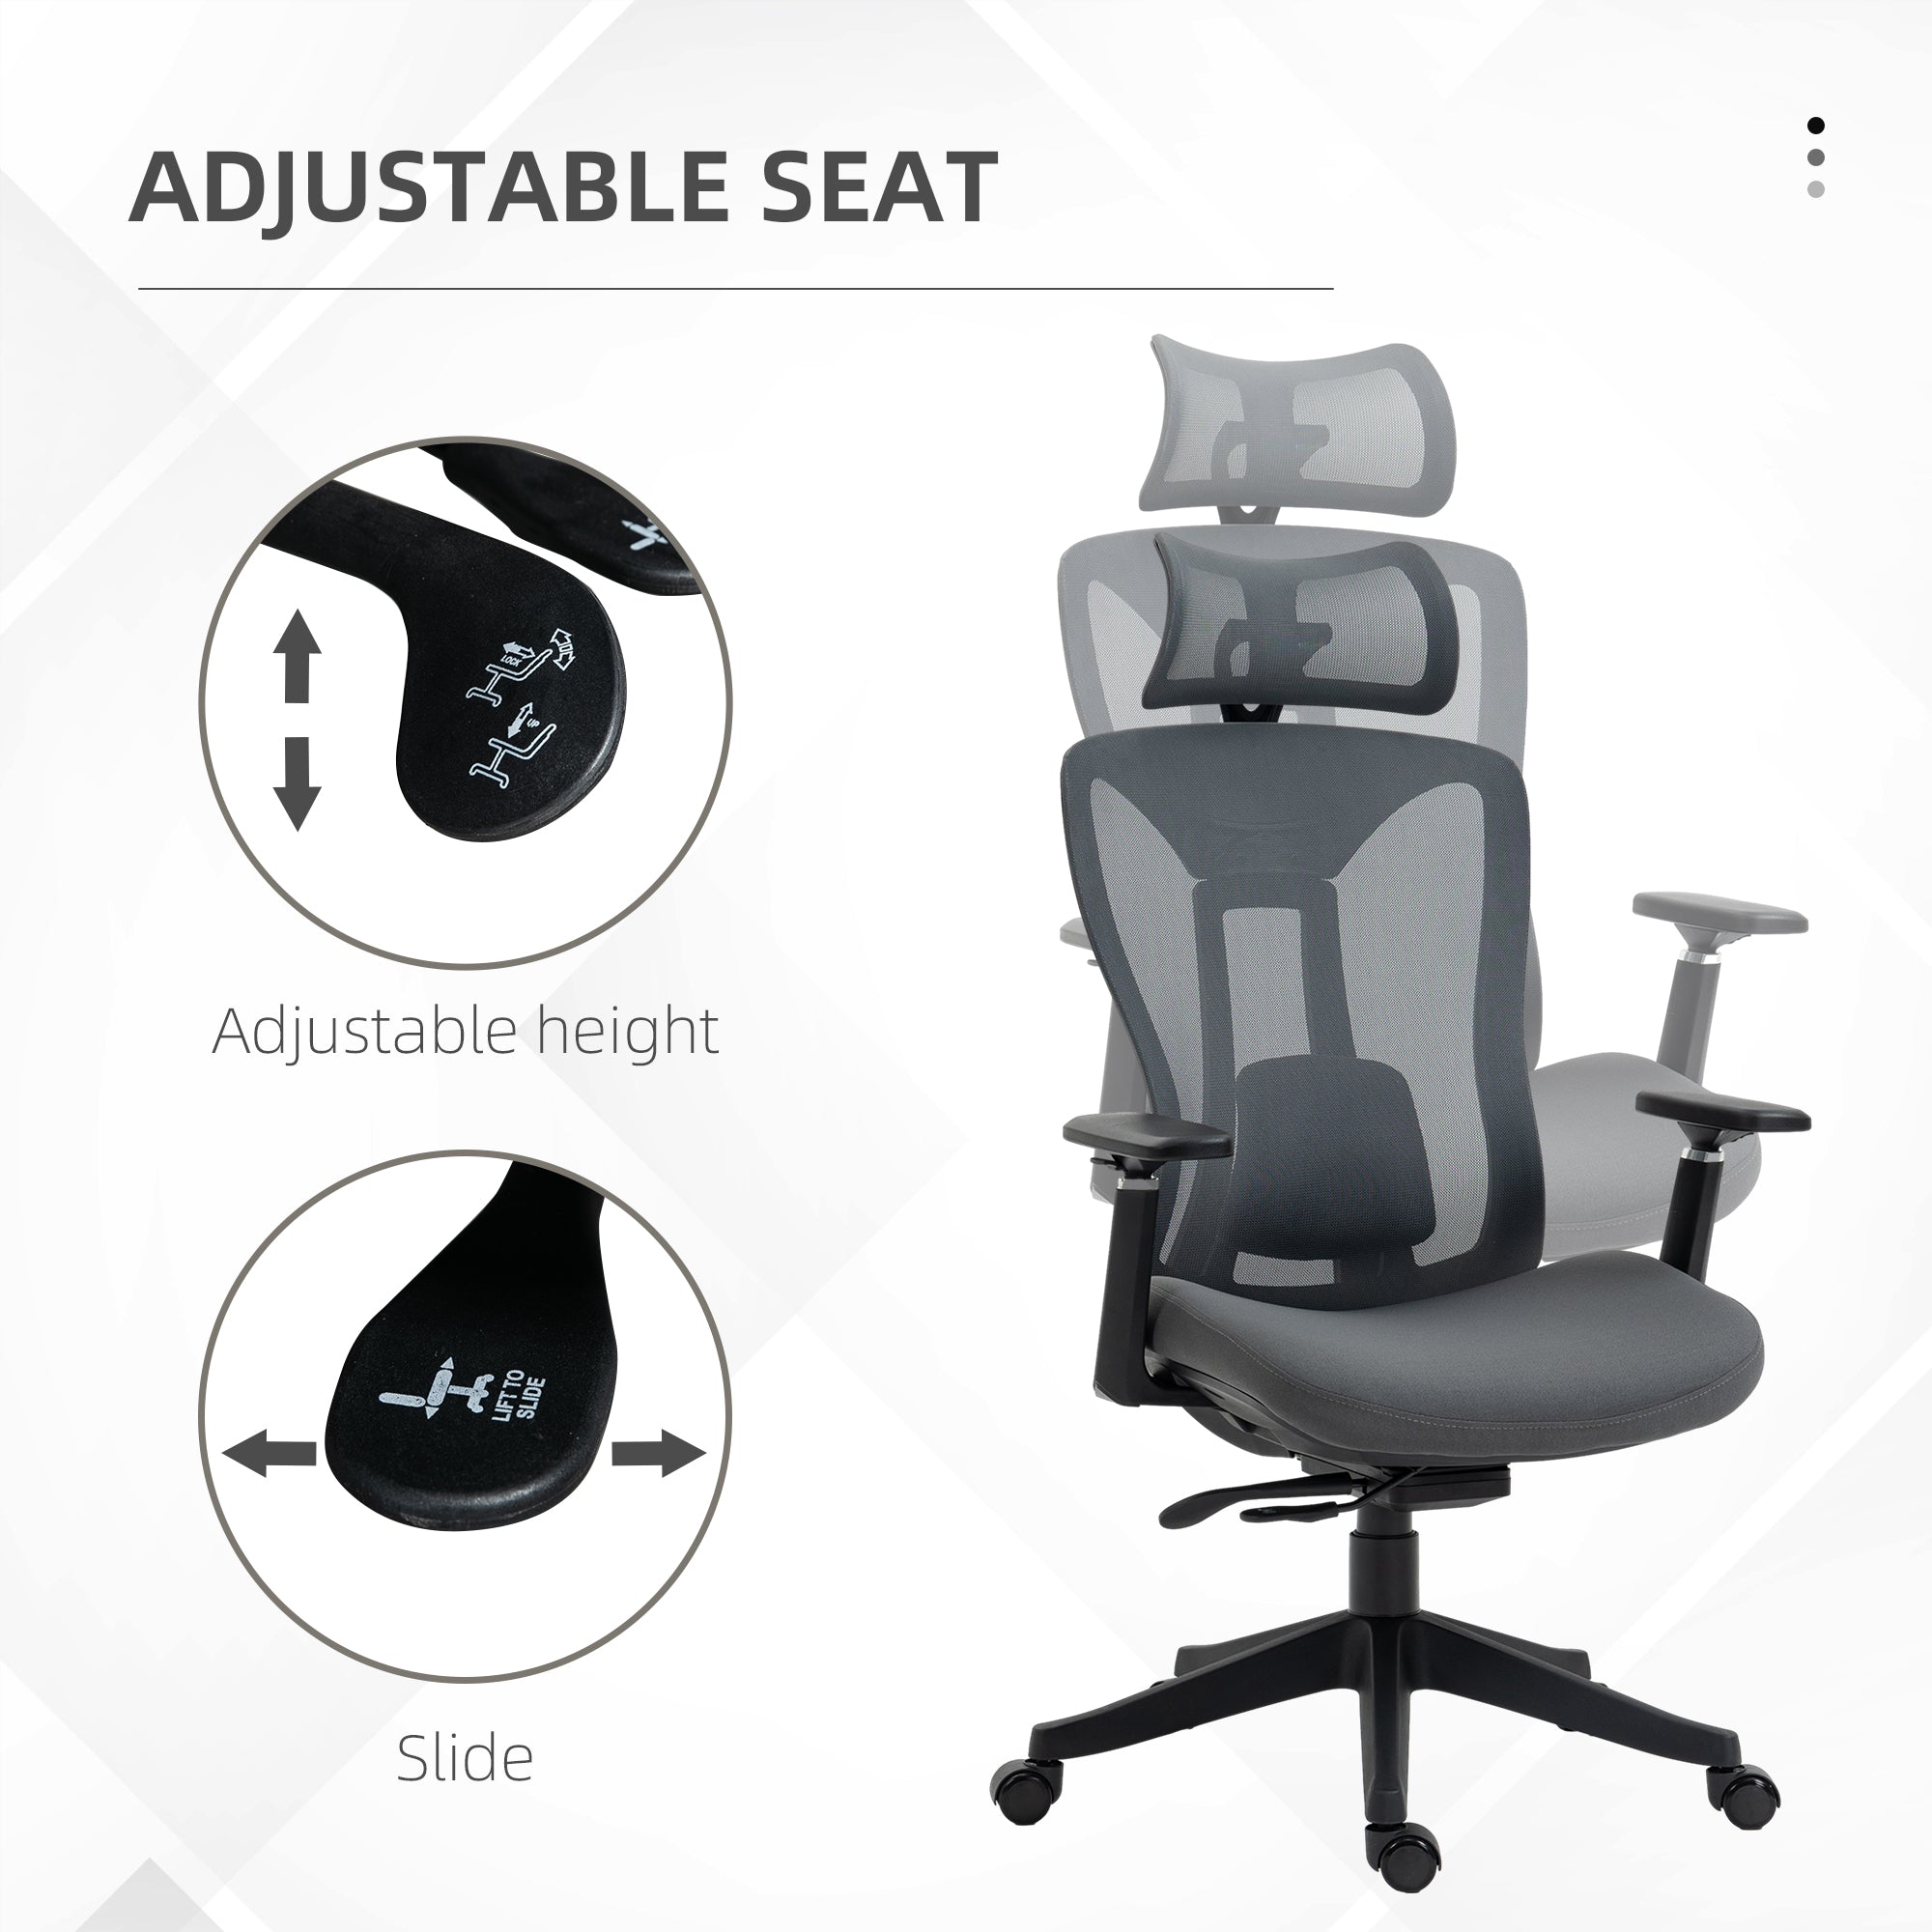 Mesh Office Chair, Reclining Desk Chair with Adjustable Headrest, Lumbar Support, 3D Armrest, Sliding Seat, Swivel Wheels, Grey-3